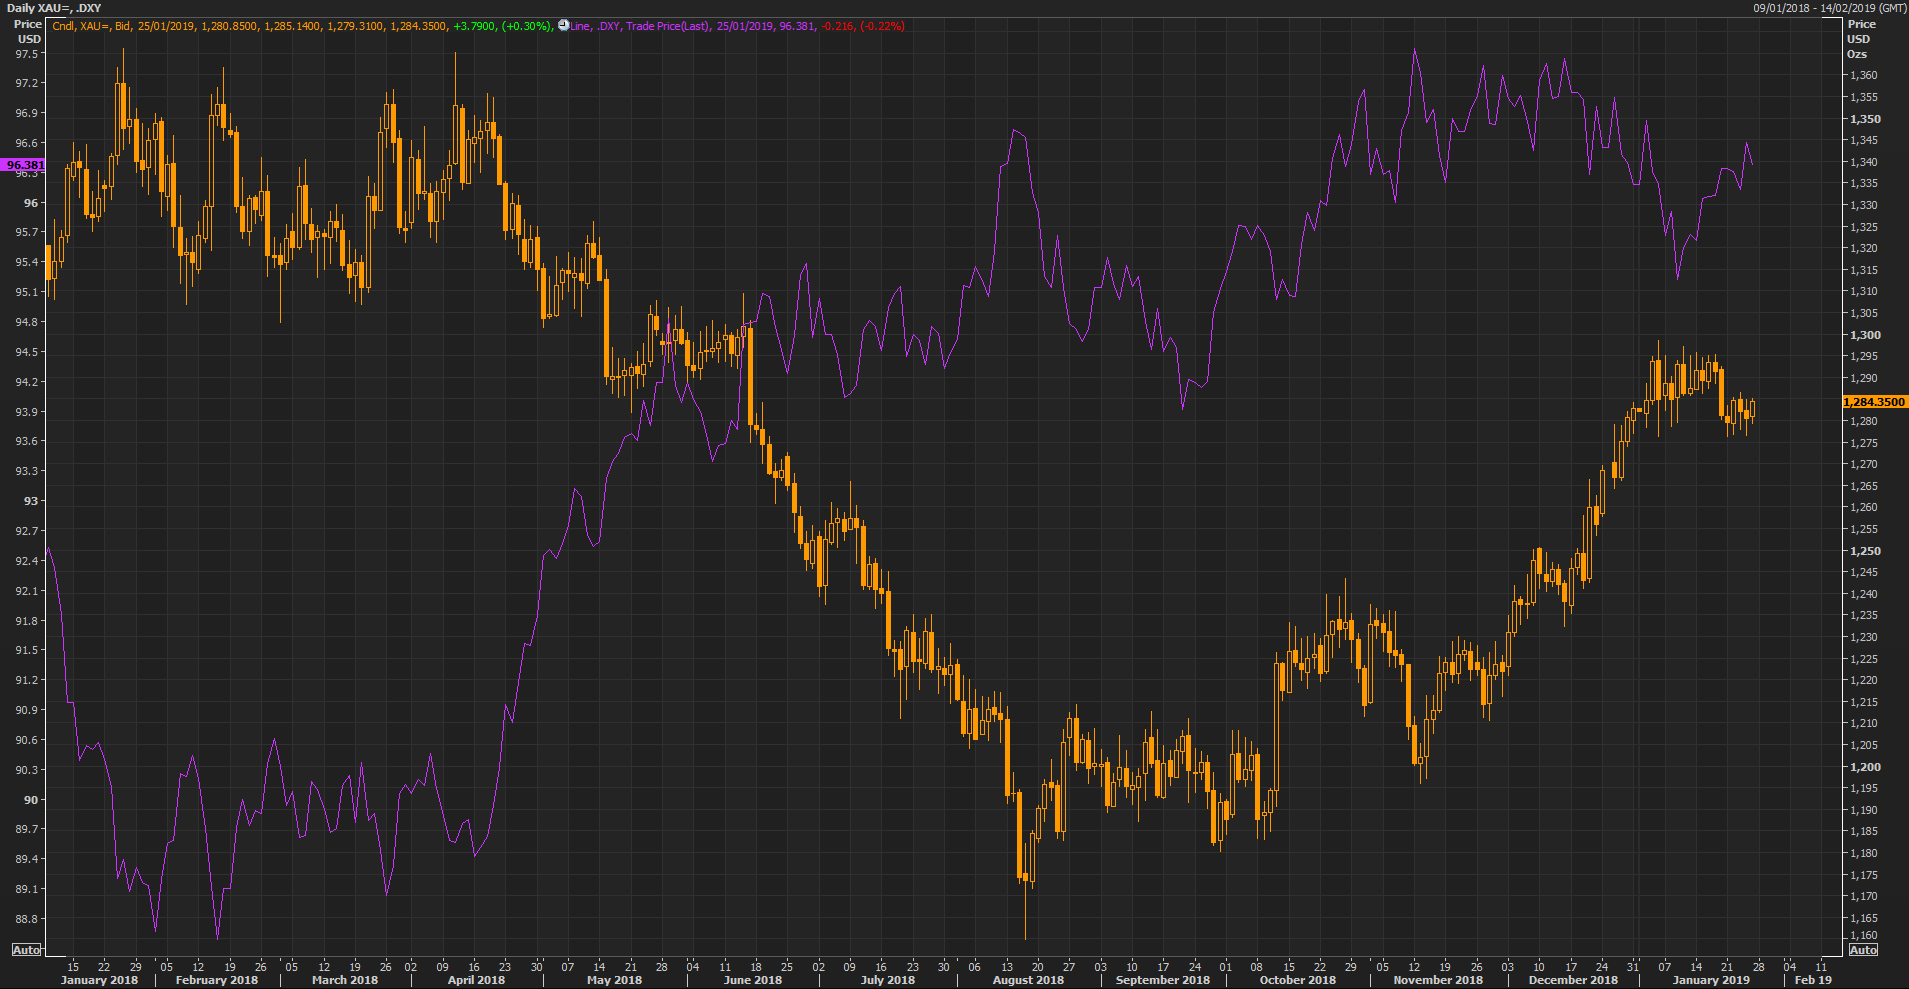 Gold vs US Dollar Index (Purple)